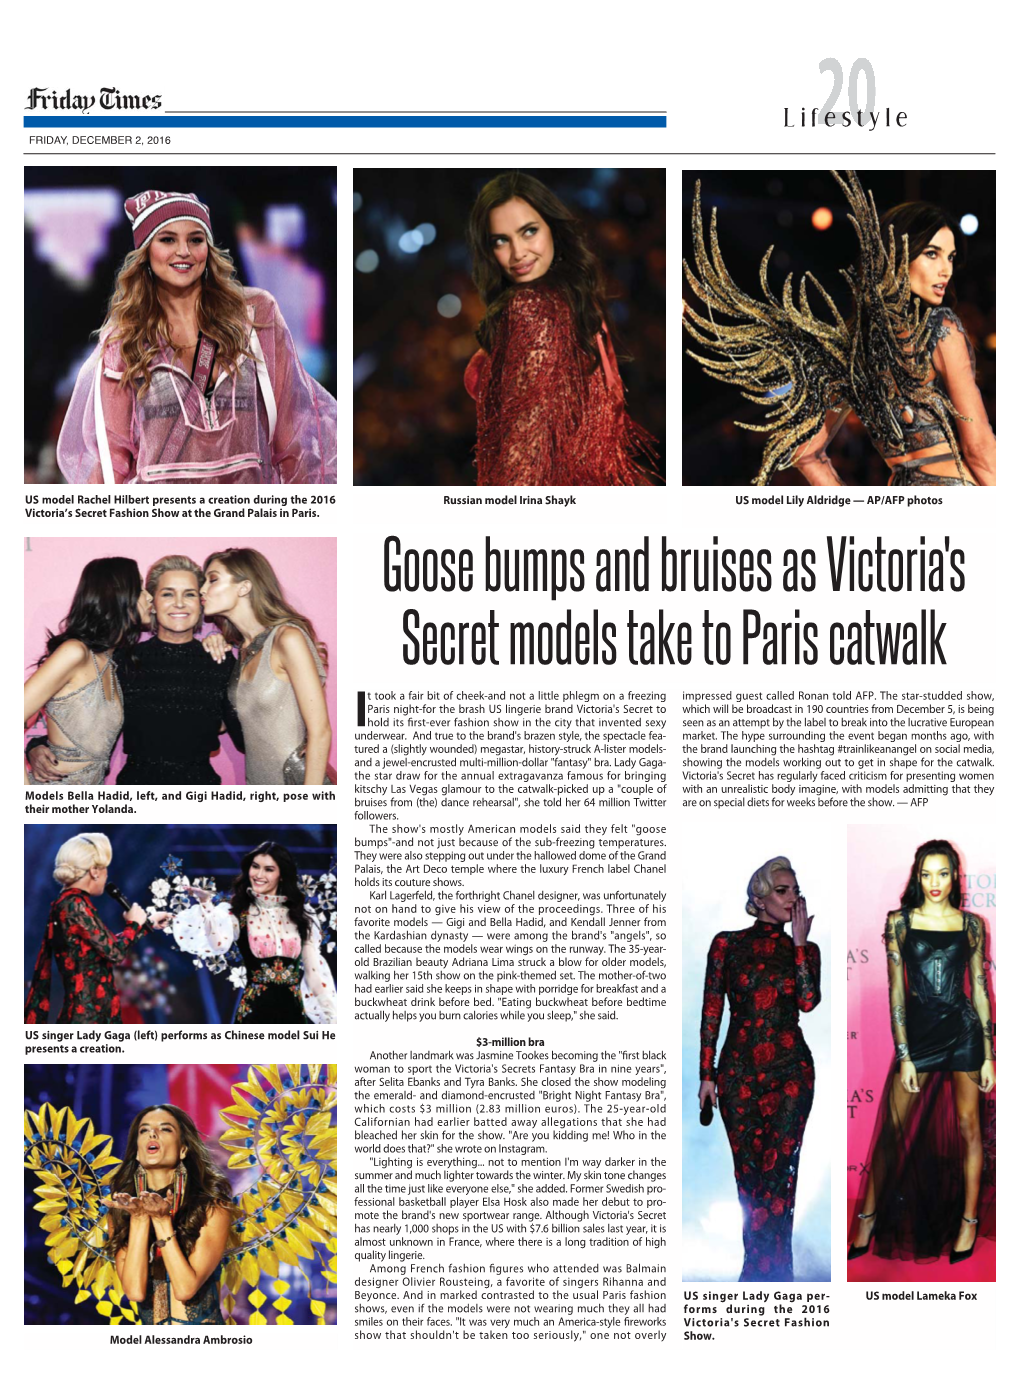 Goose Bumps and Bruises As Victoria's Secret Models Take to Paris Catwalk